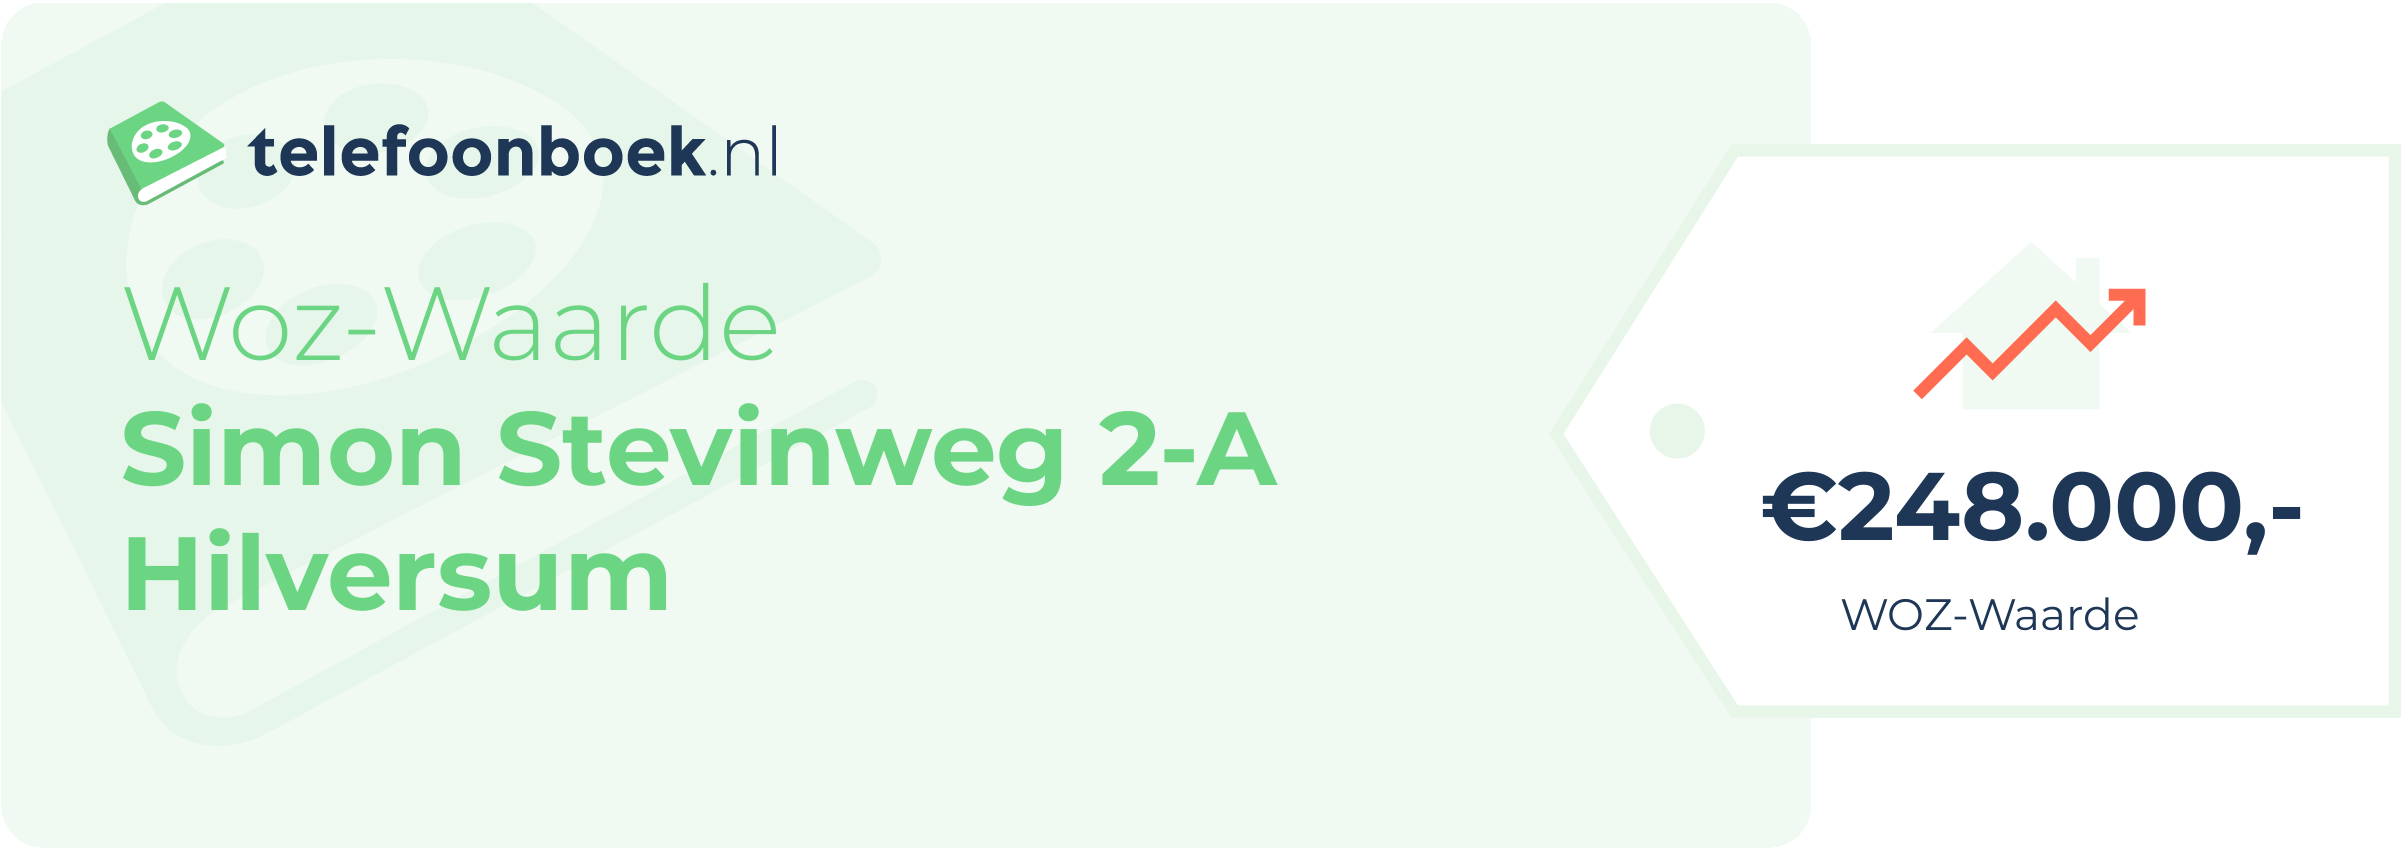 WOZ-waarde Simon Stevinweg 2-A Hilversum